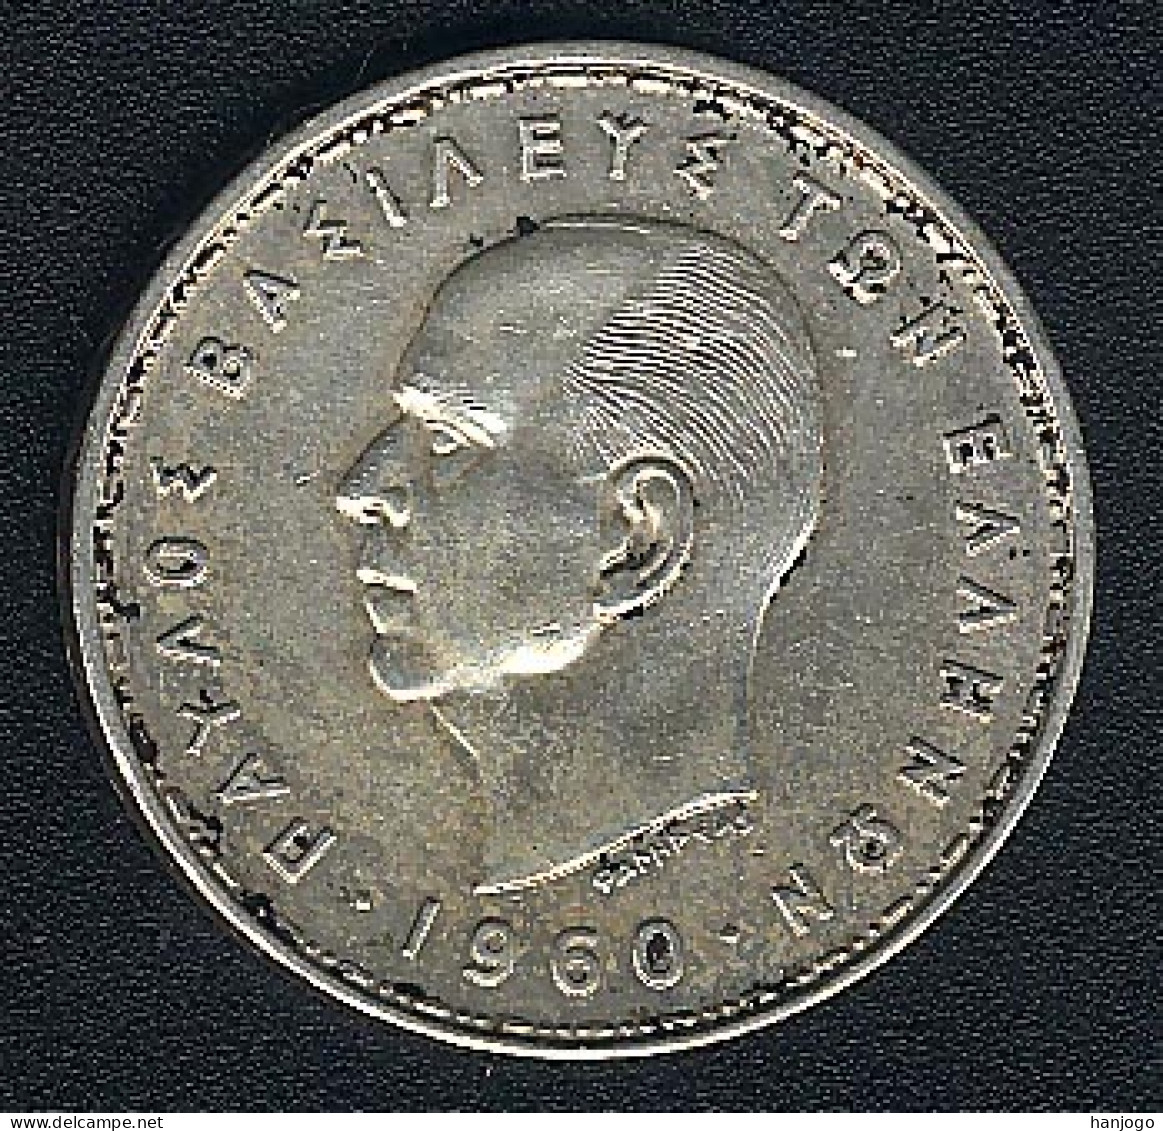 Griechenland, 20 Drachmai 1960, Silber, XF - Grèce